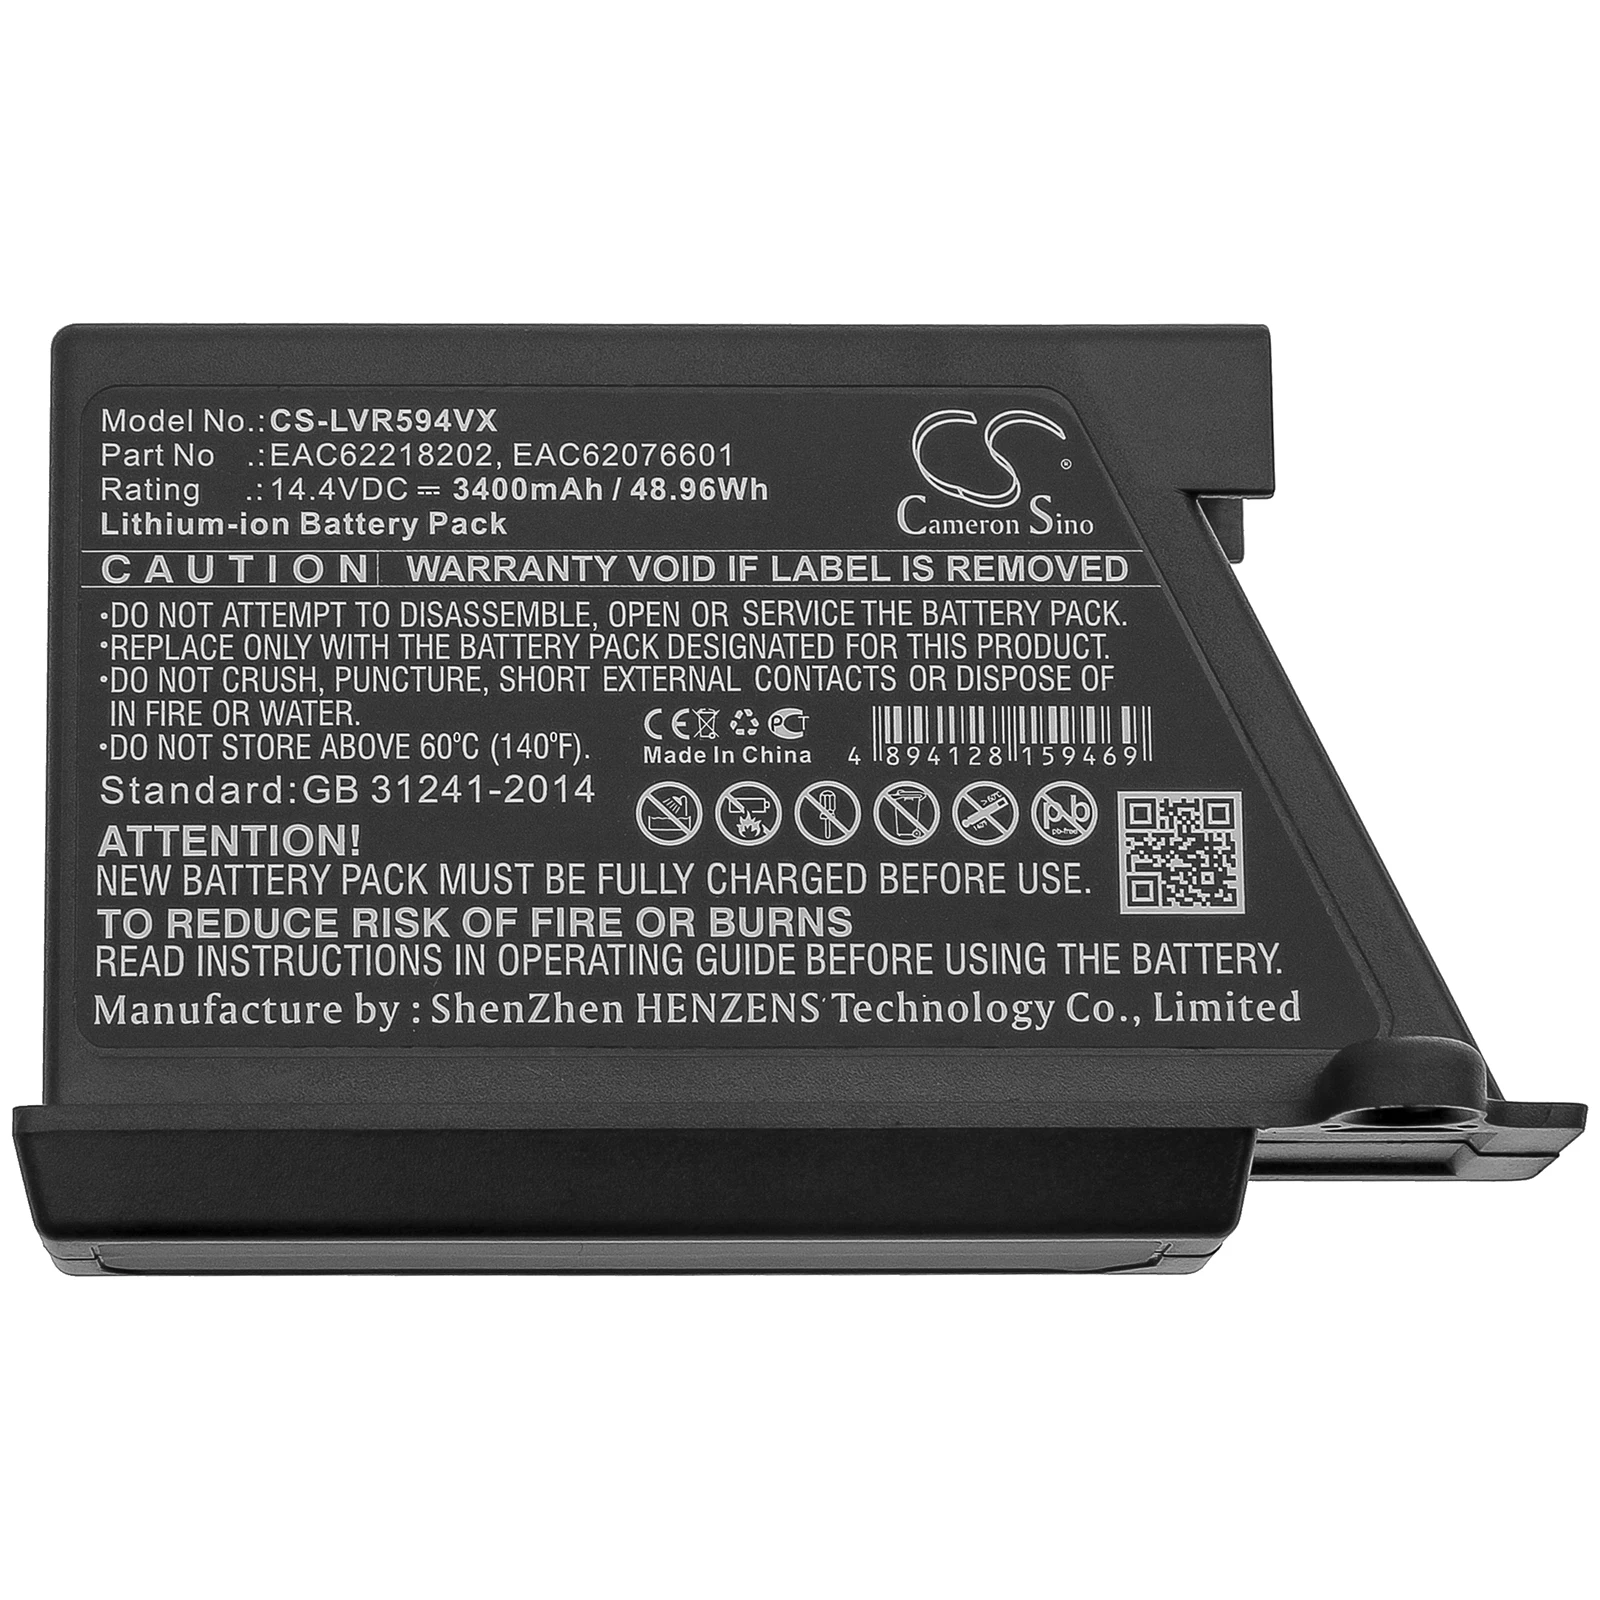 

Cameron Sino 3400mAh Battery for LG VR34406LV,VR34408LV,VR5902LVM,VR5940L,VR5942L,VR5943L,VR6170LVM,VR6171LVM,VR62601LV,VR6260